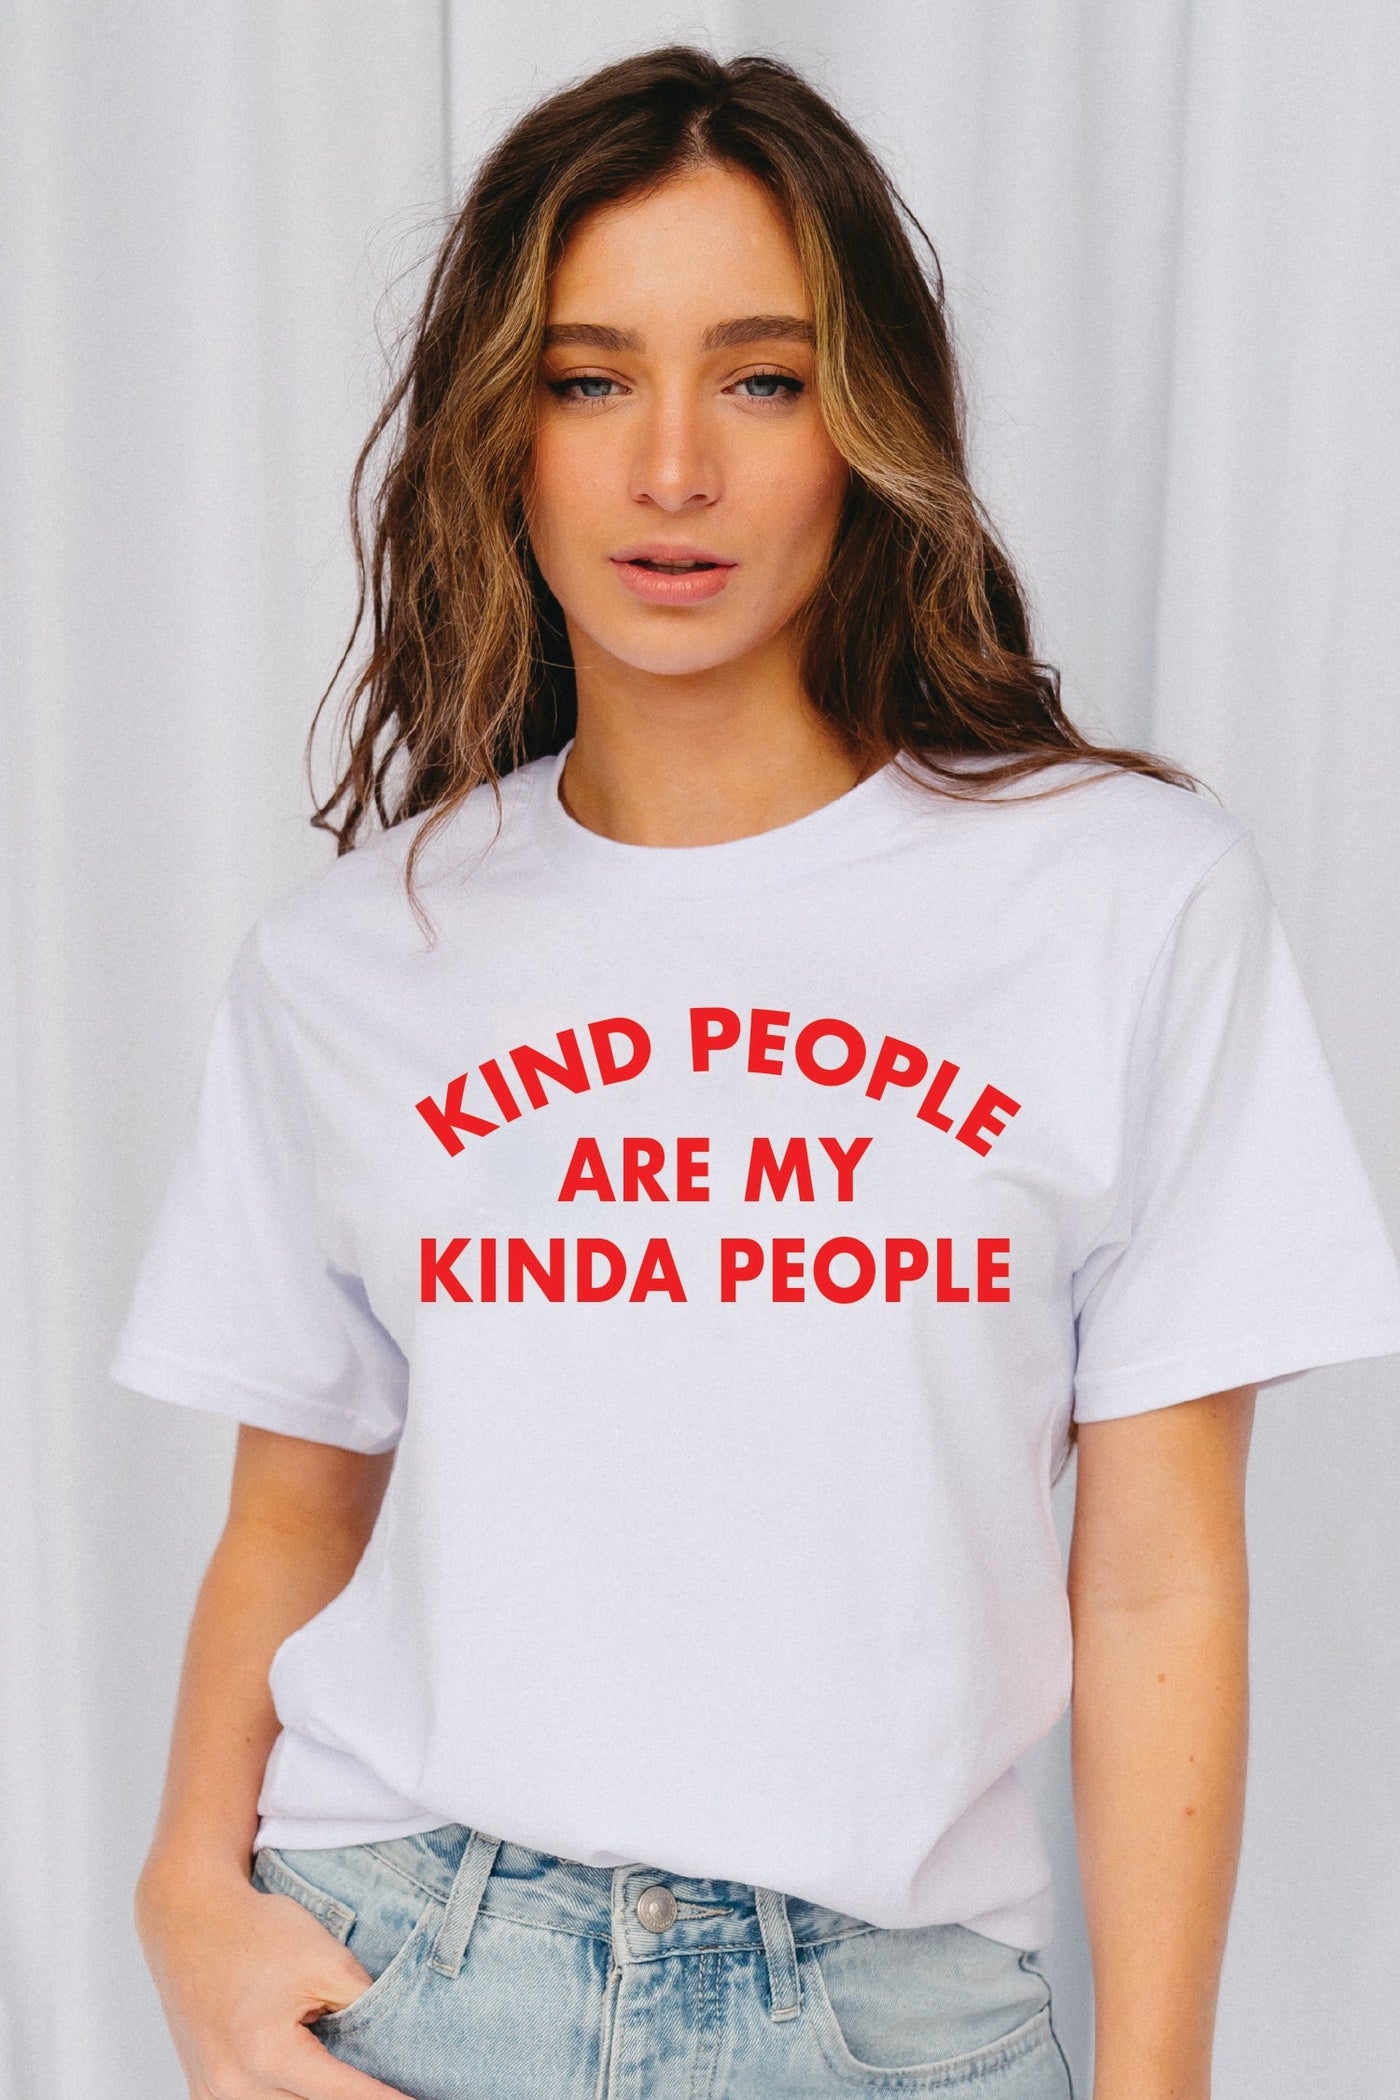 Kind People Are My Kinda People Shirts Selfawear 